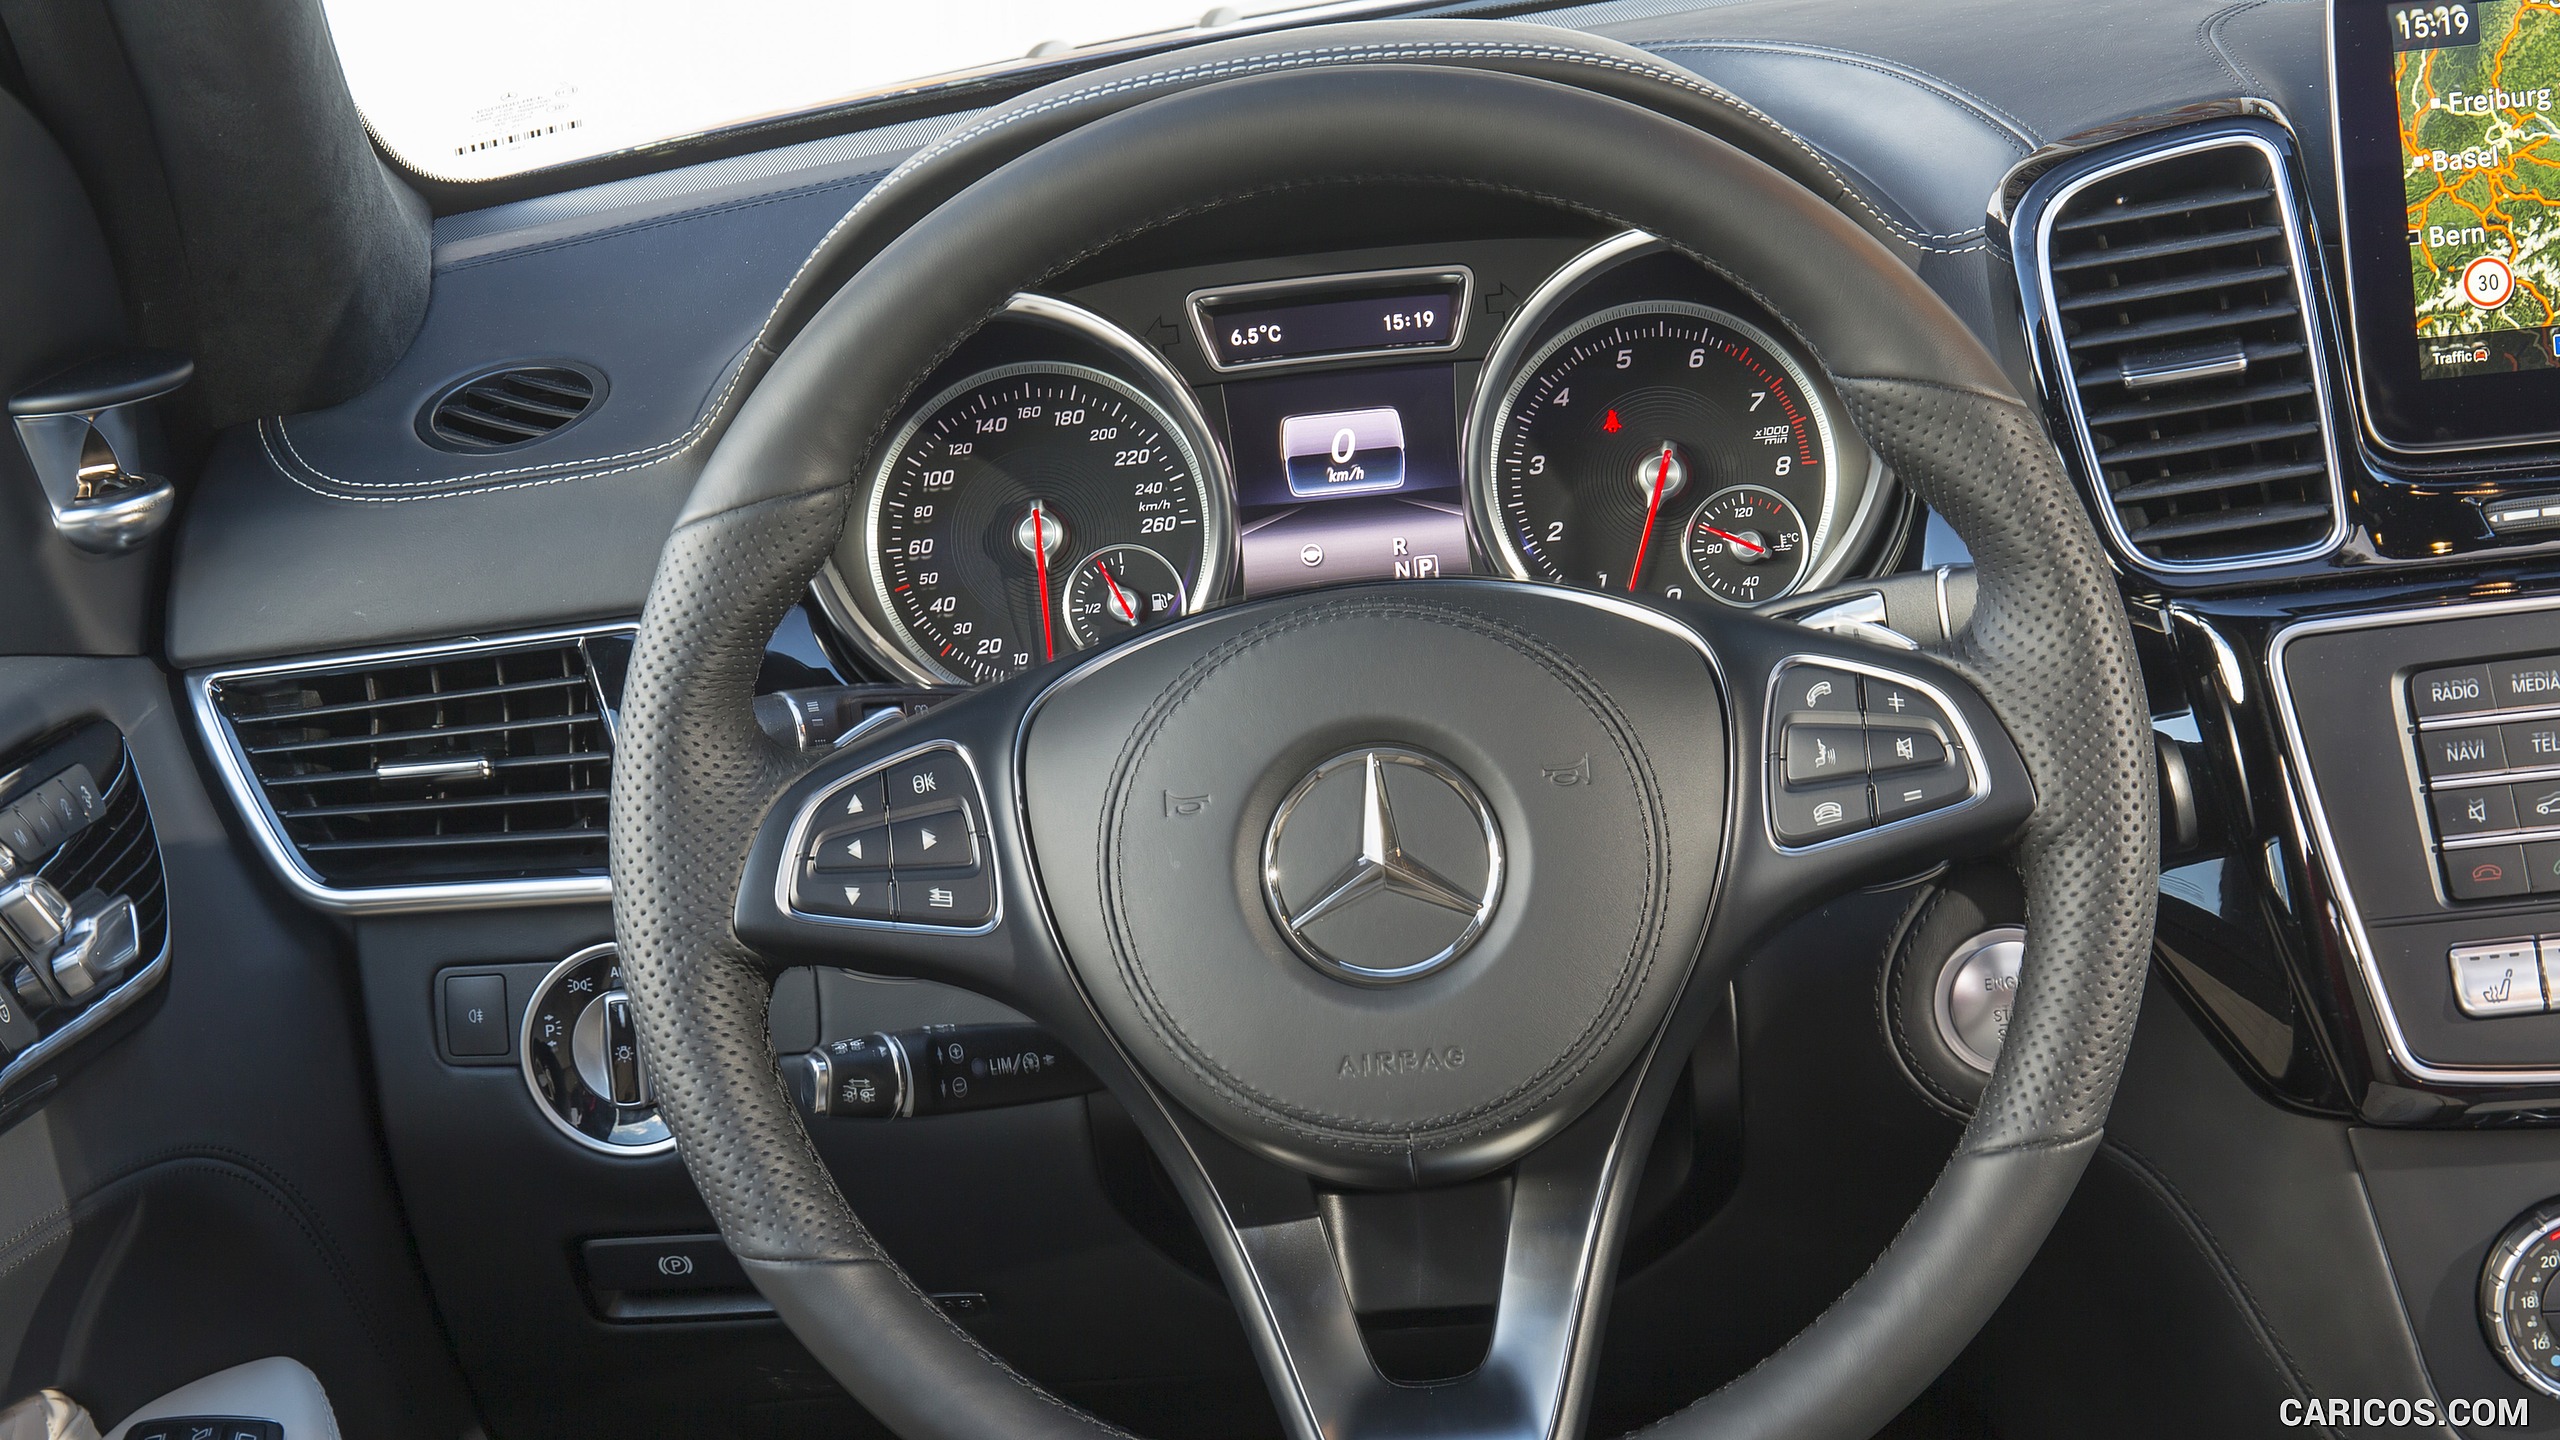 2017 Mercedes-Benz GLS 400 4MATIC AMG Line - Interior, Steering Wheel, #117 of 255